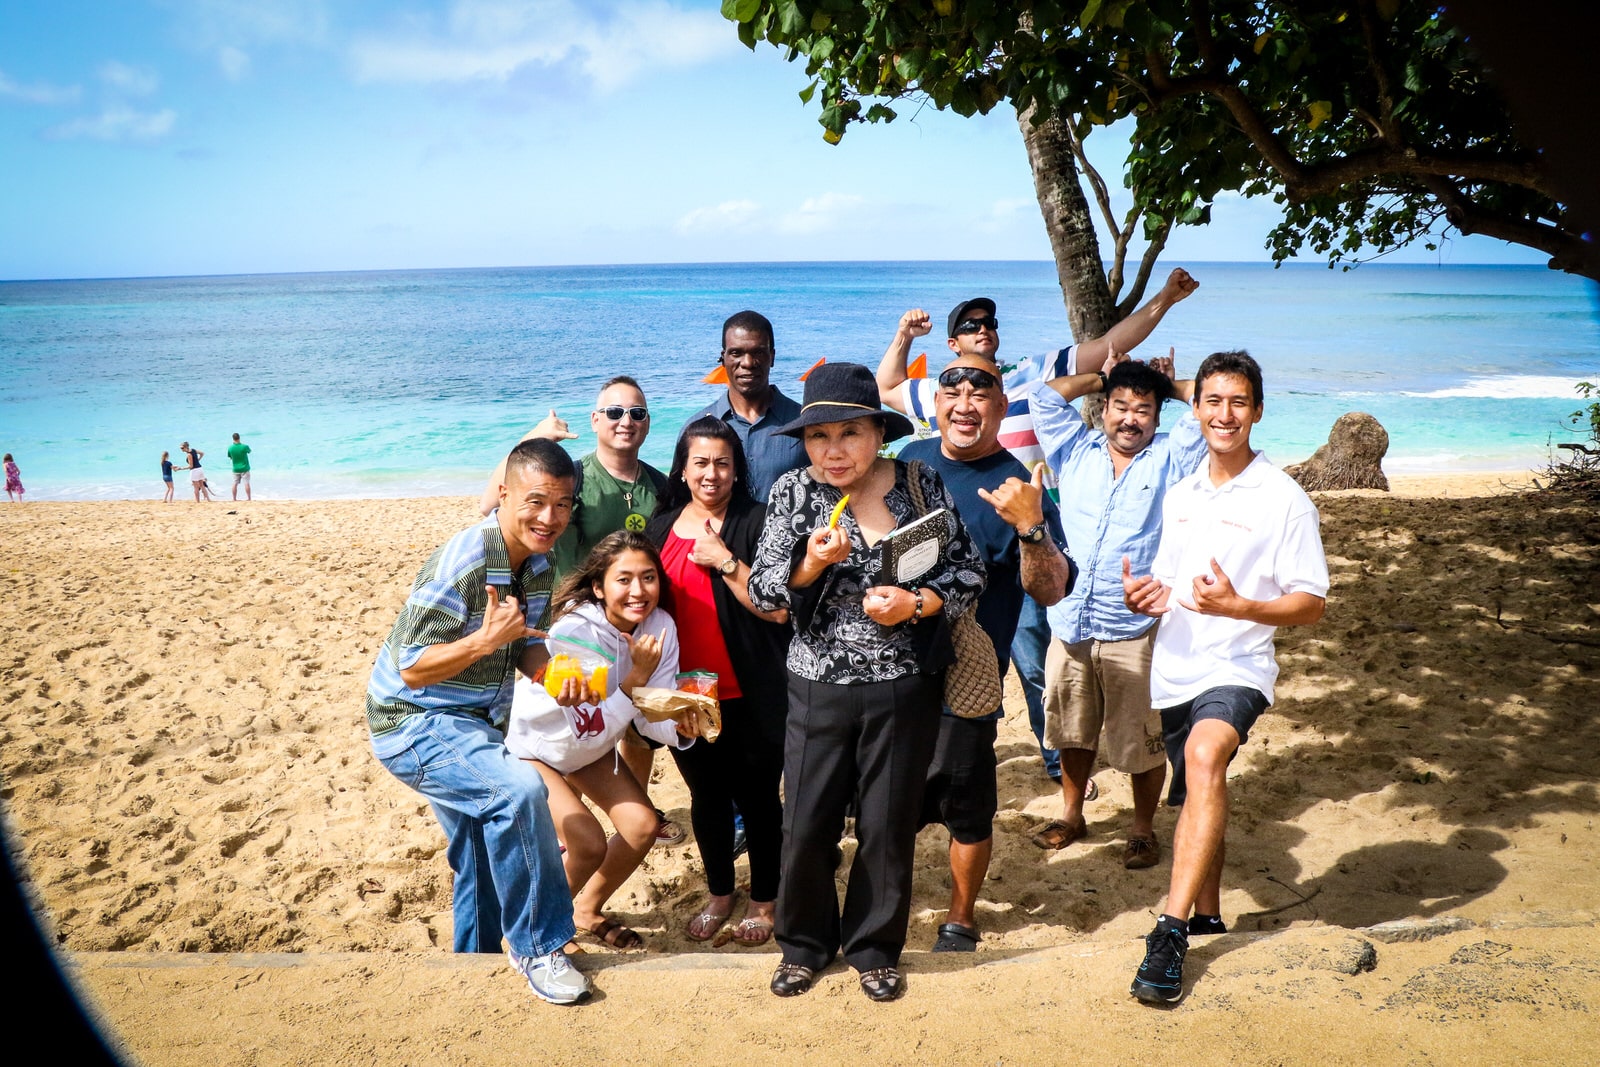 Oahu circle-island tour stops at Sunset Beach